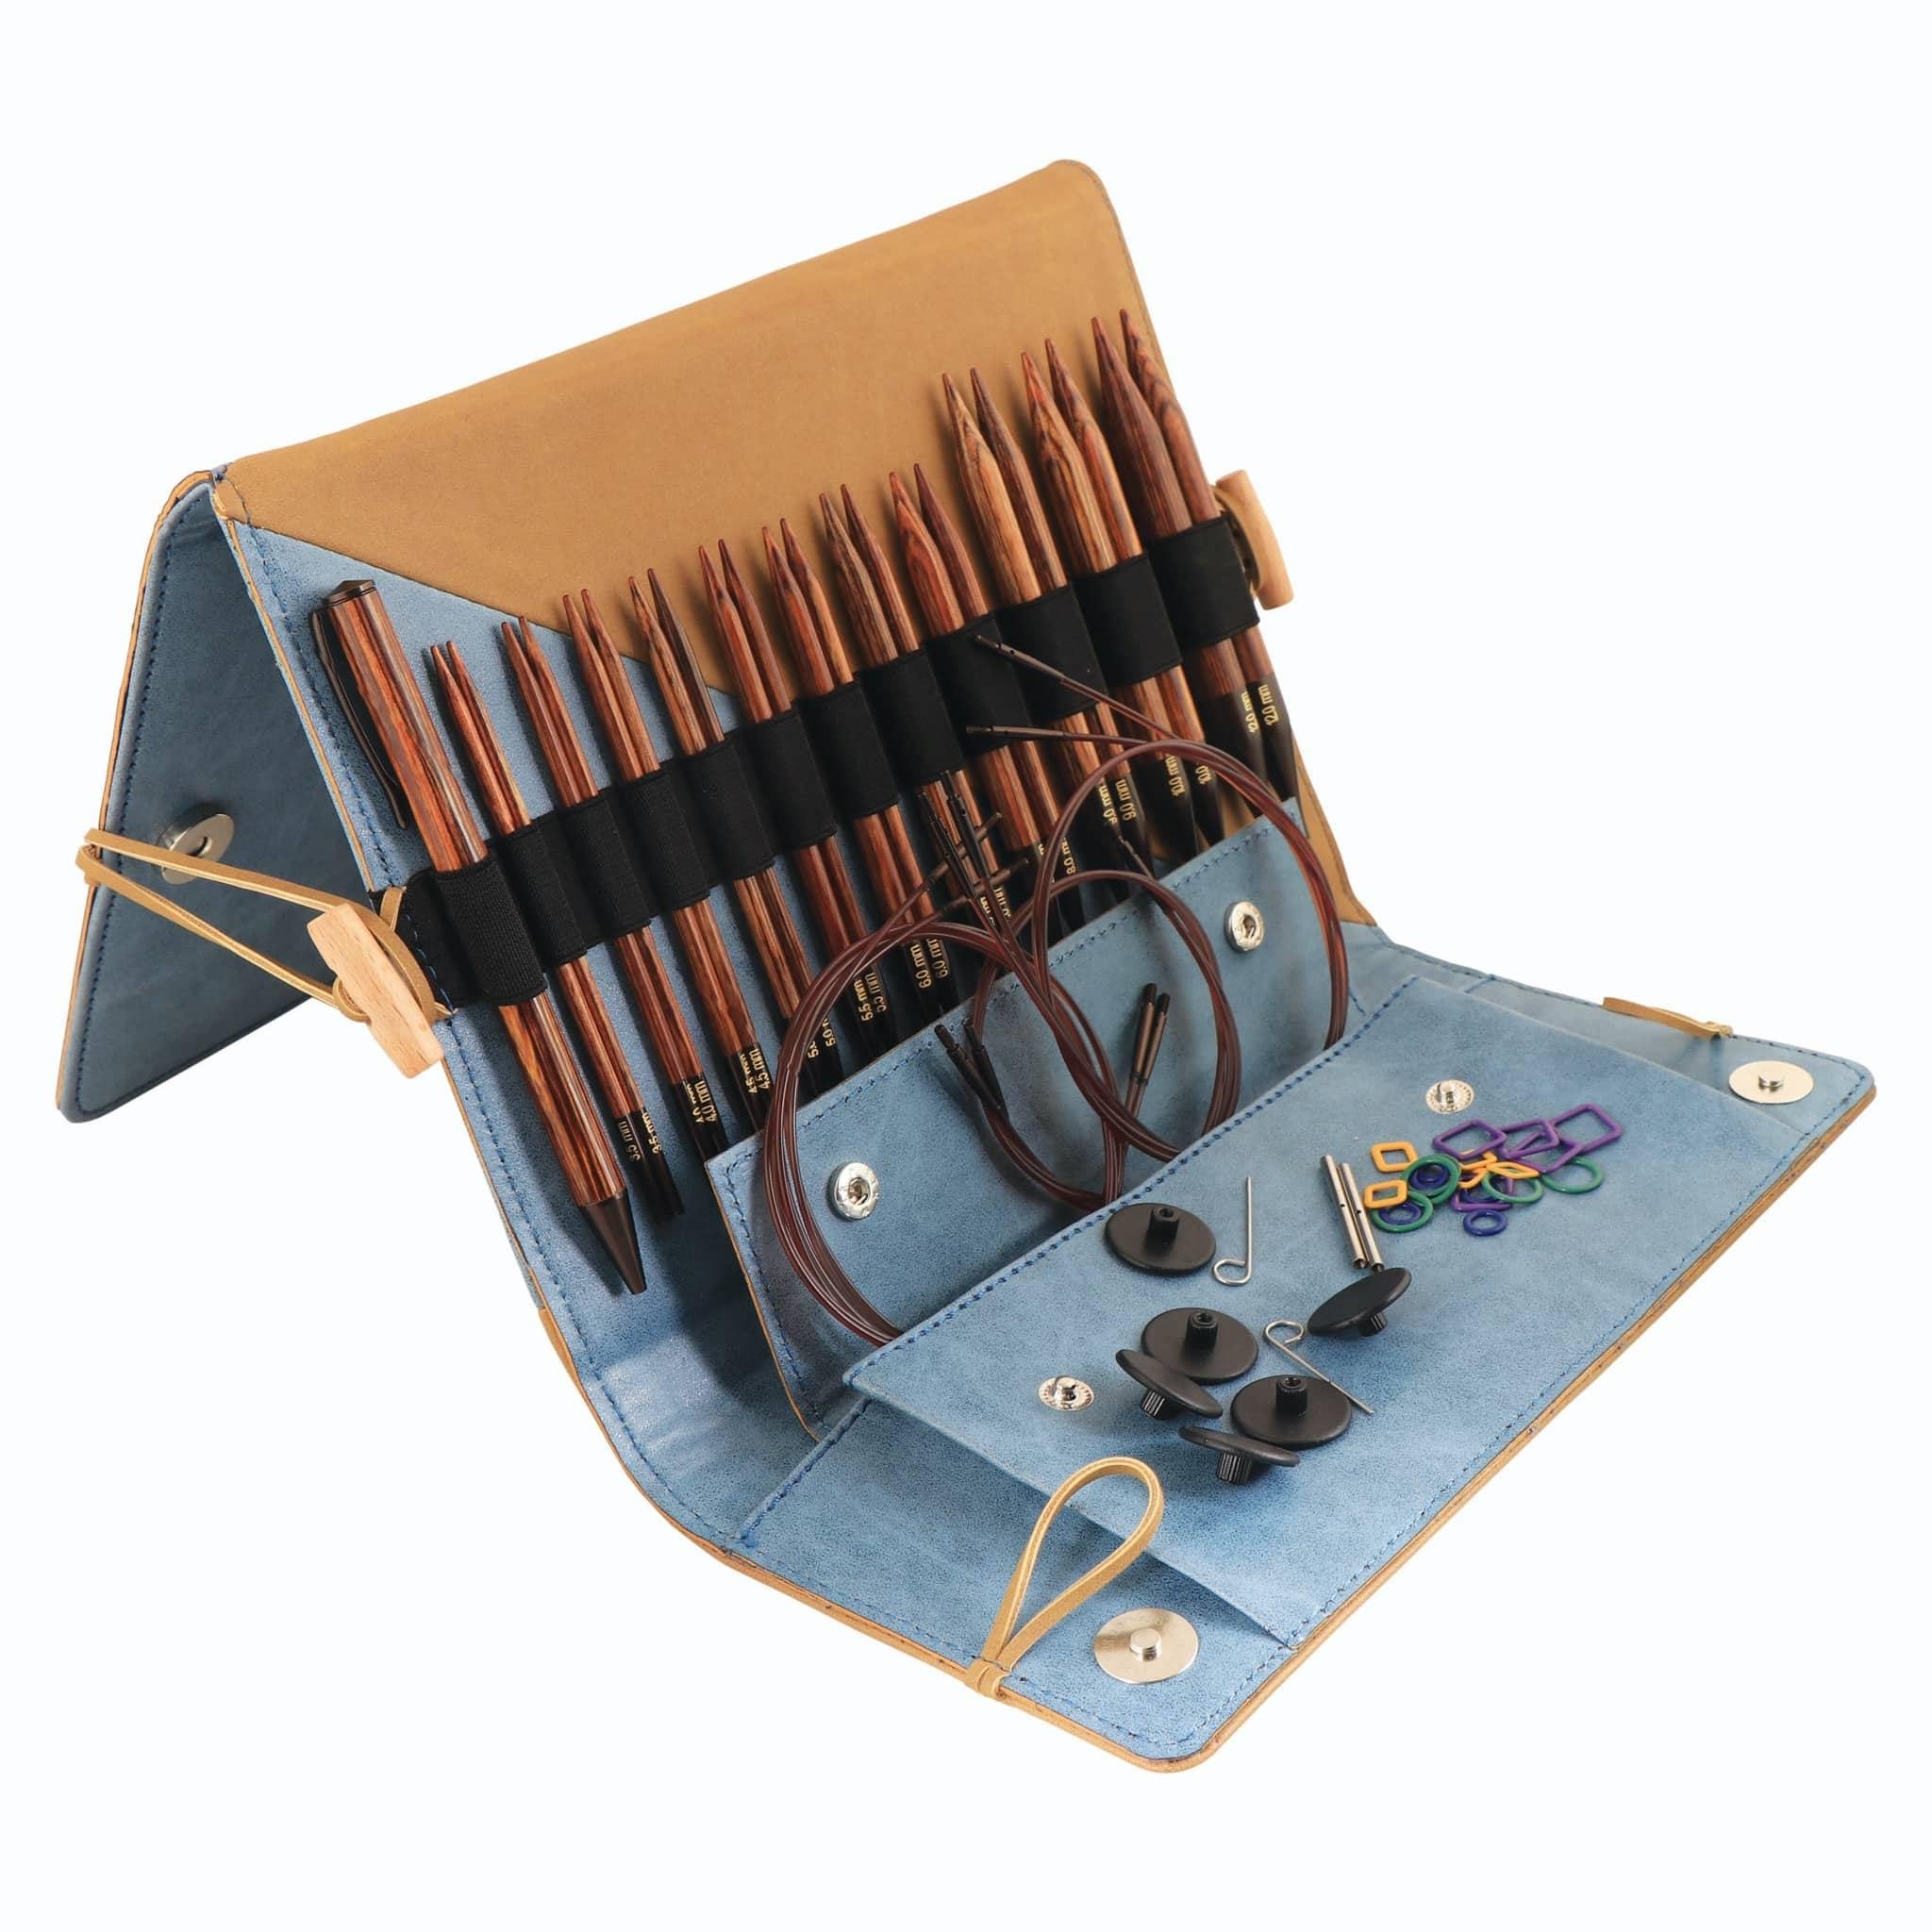 Knitpro Ginger Knitting Pins Circular Interchangeable Standard - Deluxe Set - Woolshop.co.uk